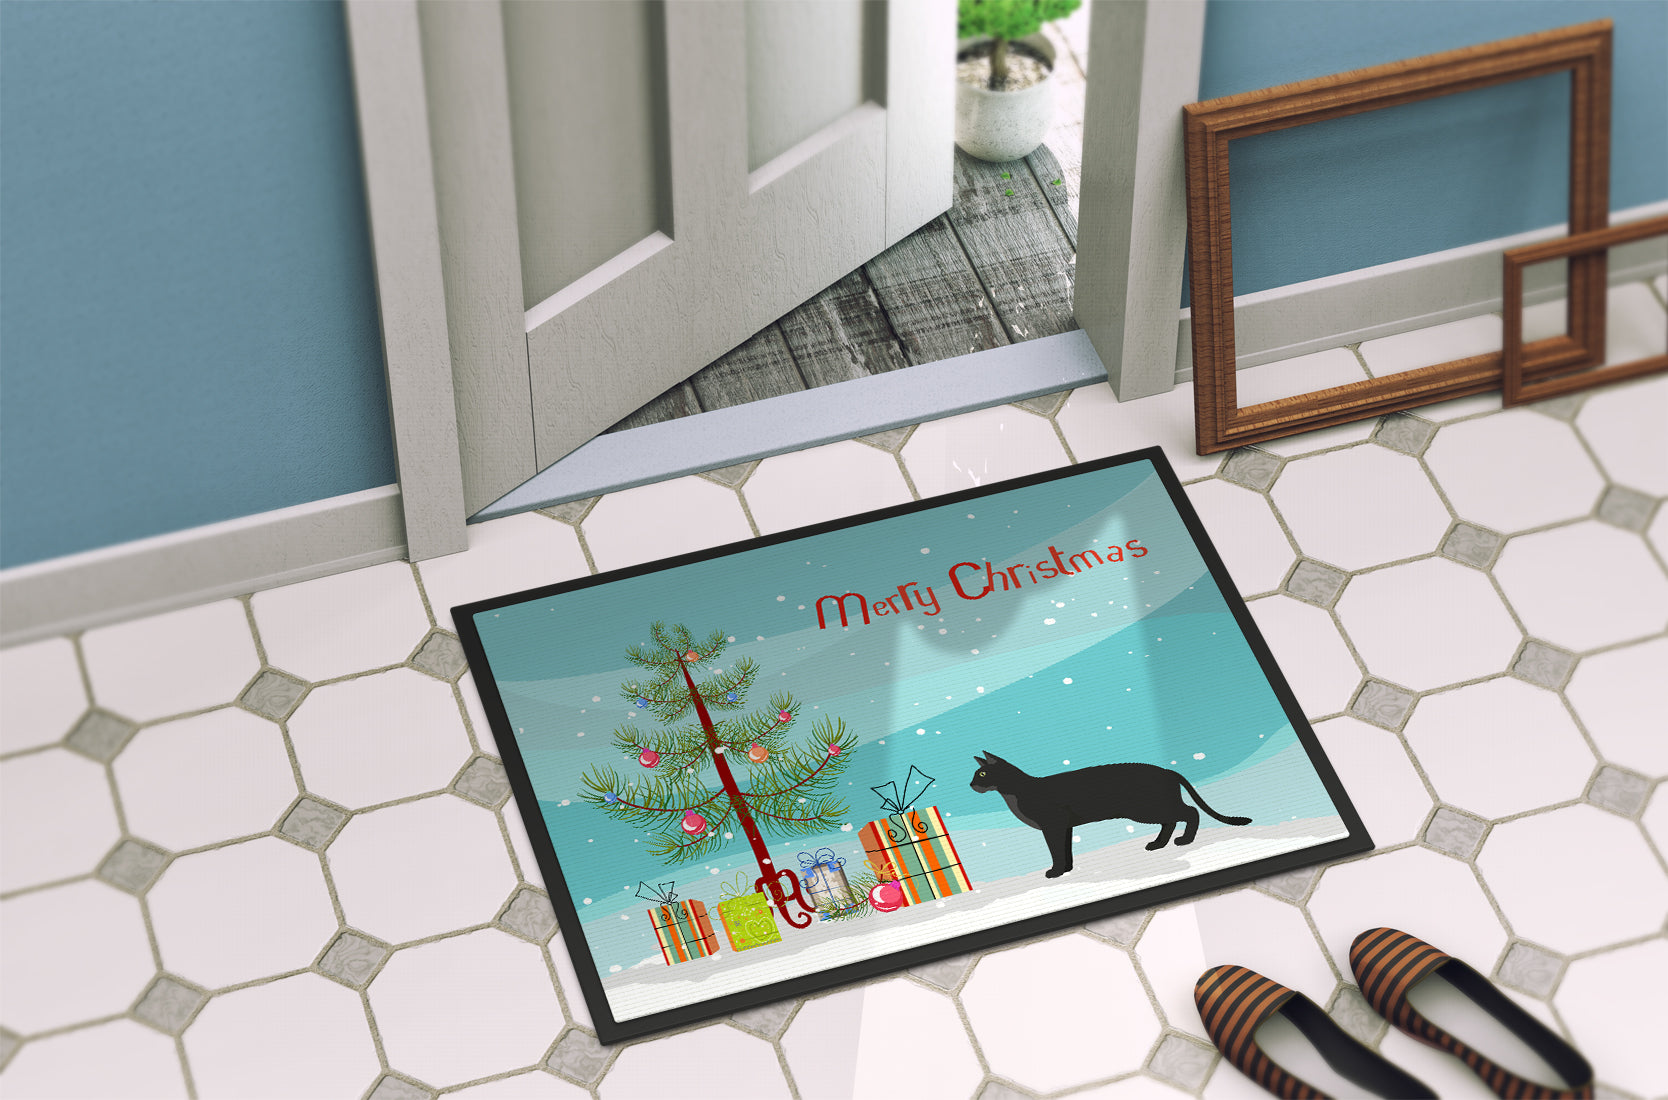 Chausie Black Cat Merry Christmas Indoor or Outdoor Mat 18x27 CK4585MAT - the-store.com